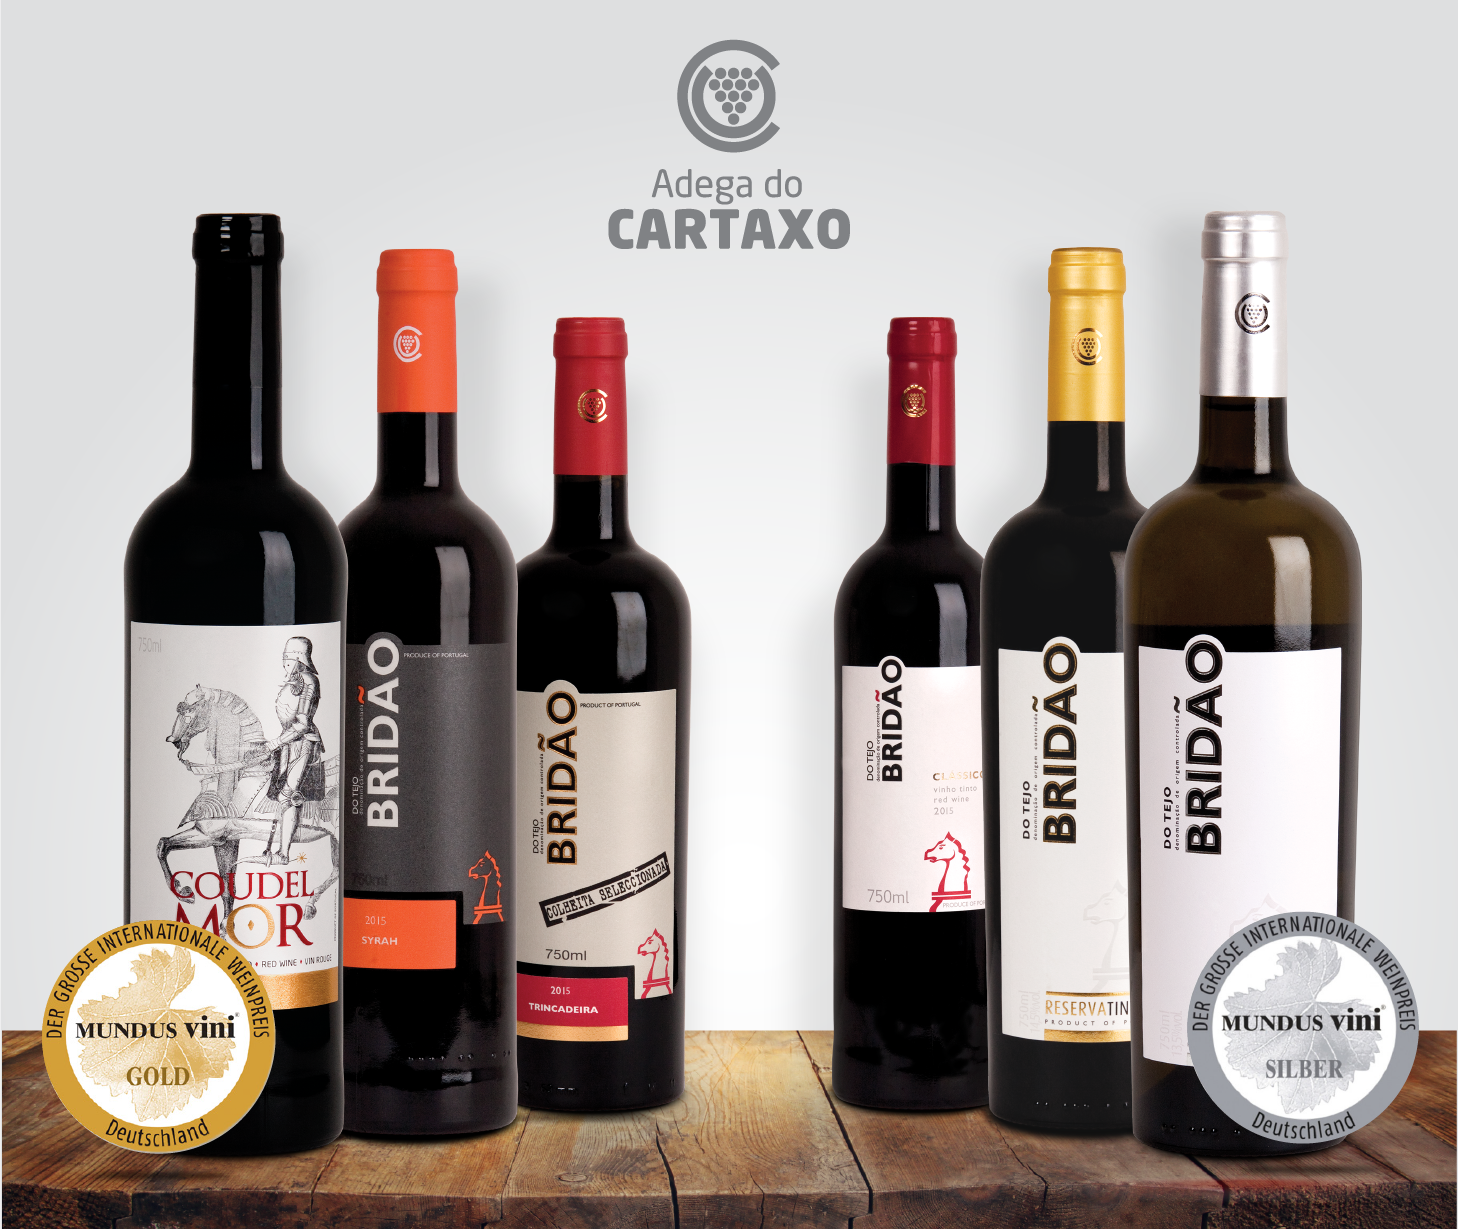 Concurso Mundus Vini premeia 6 vinhos da Adega do Cartaxo